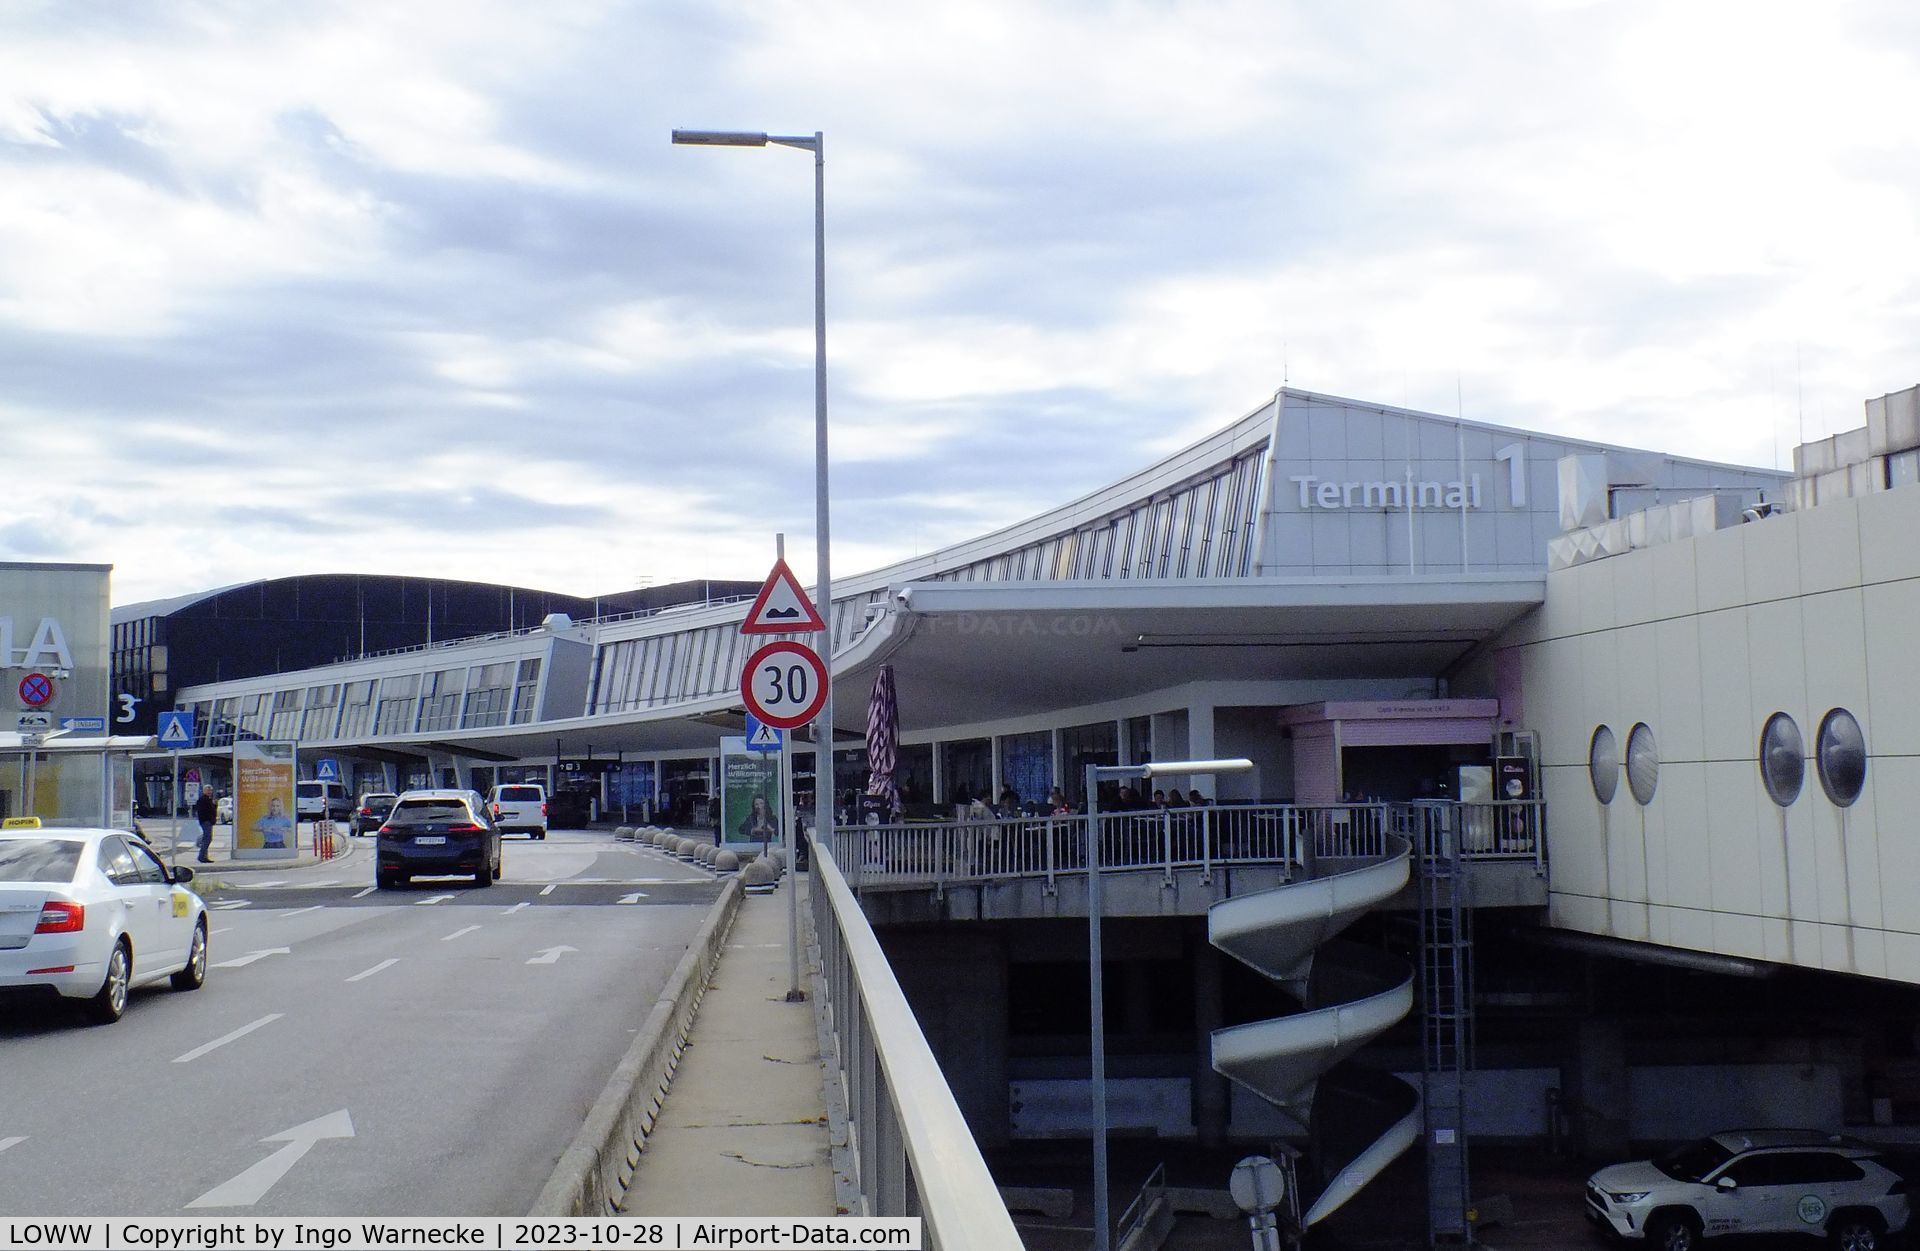 Vienna International Airport, Vienna Austria (LOWW) - landside view of terminal 1 at Wien airport